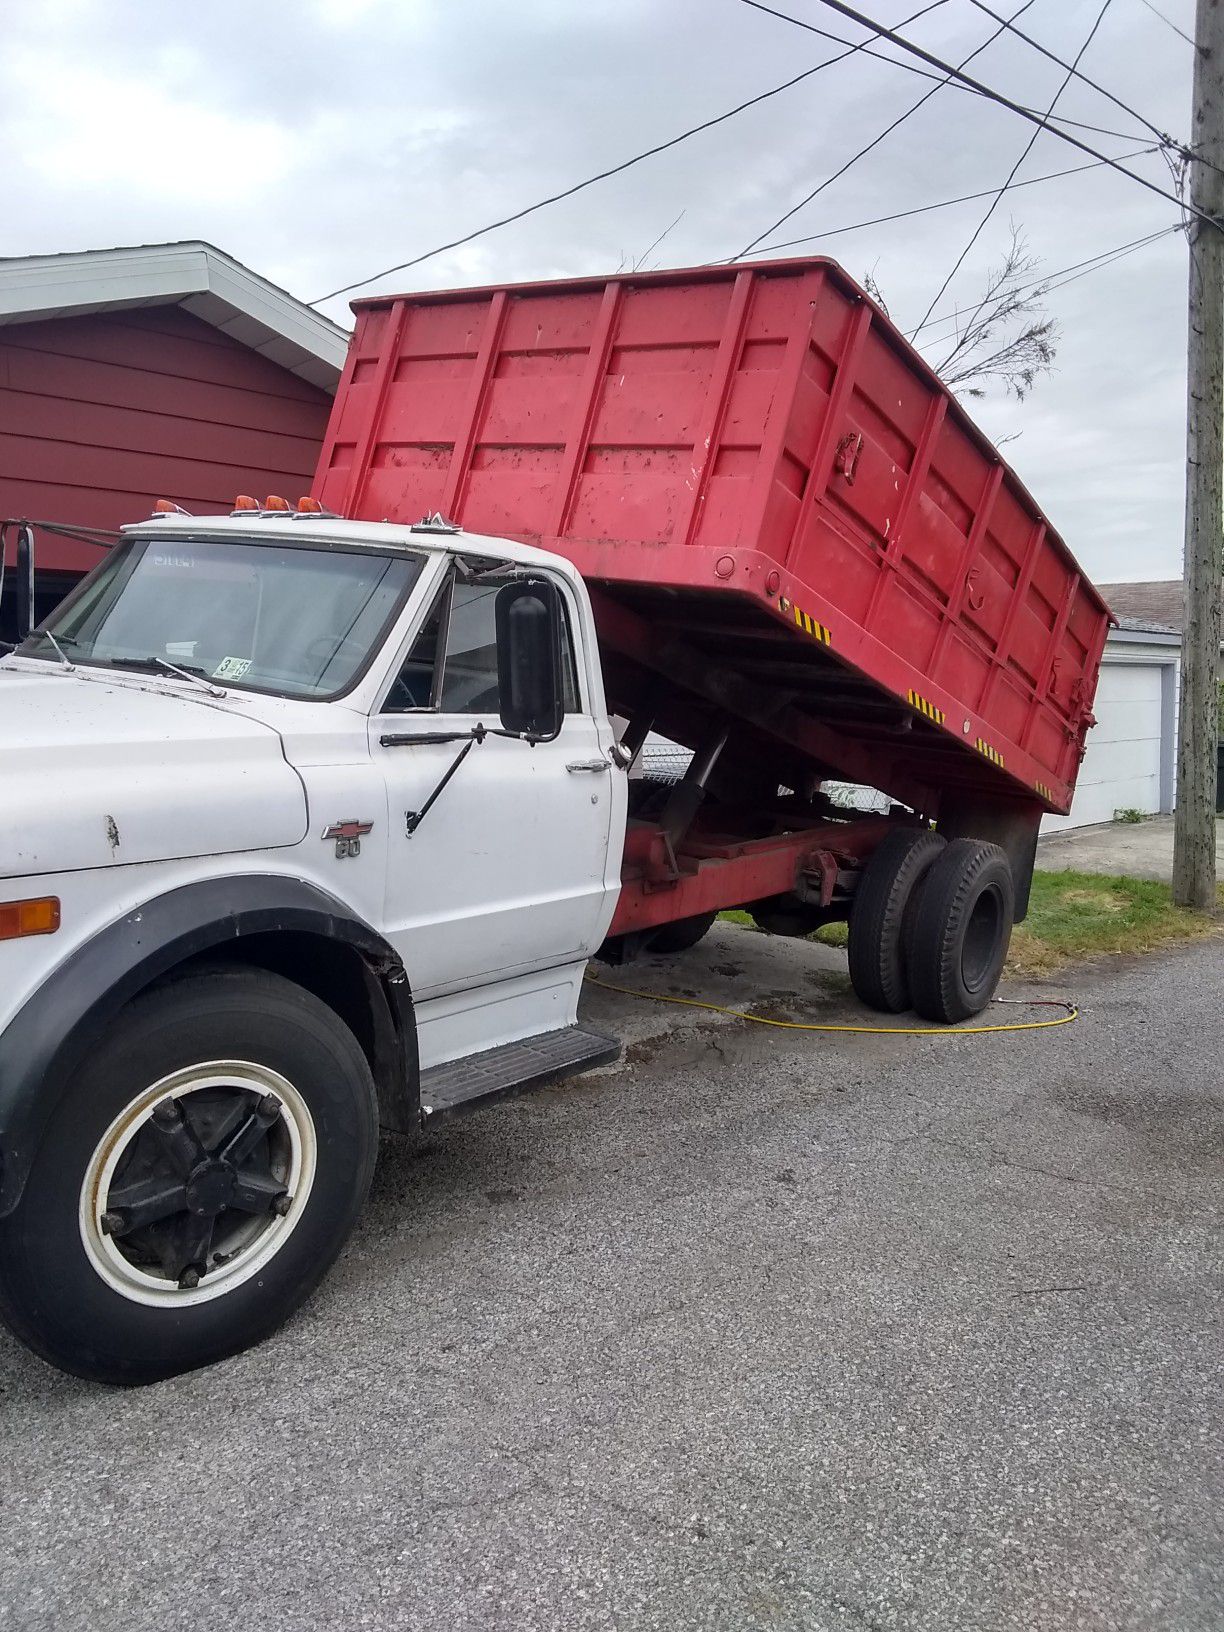 62 Chevy truck with hidraulic dump